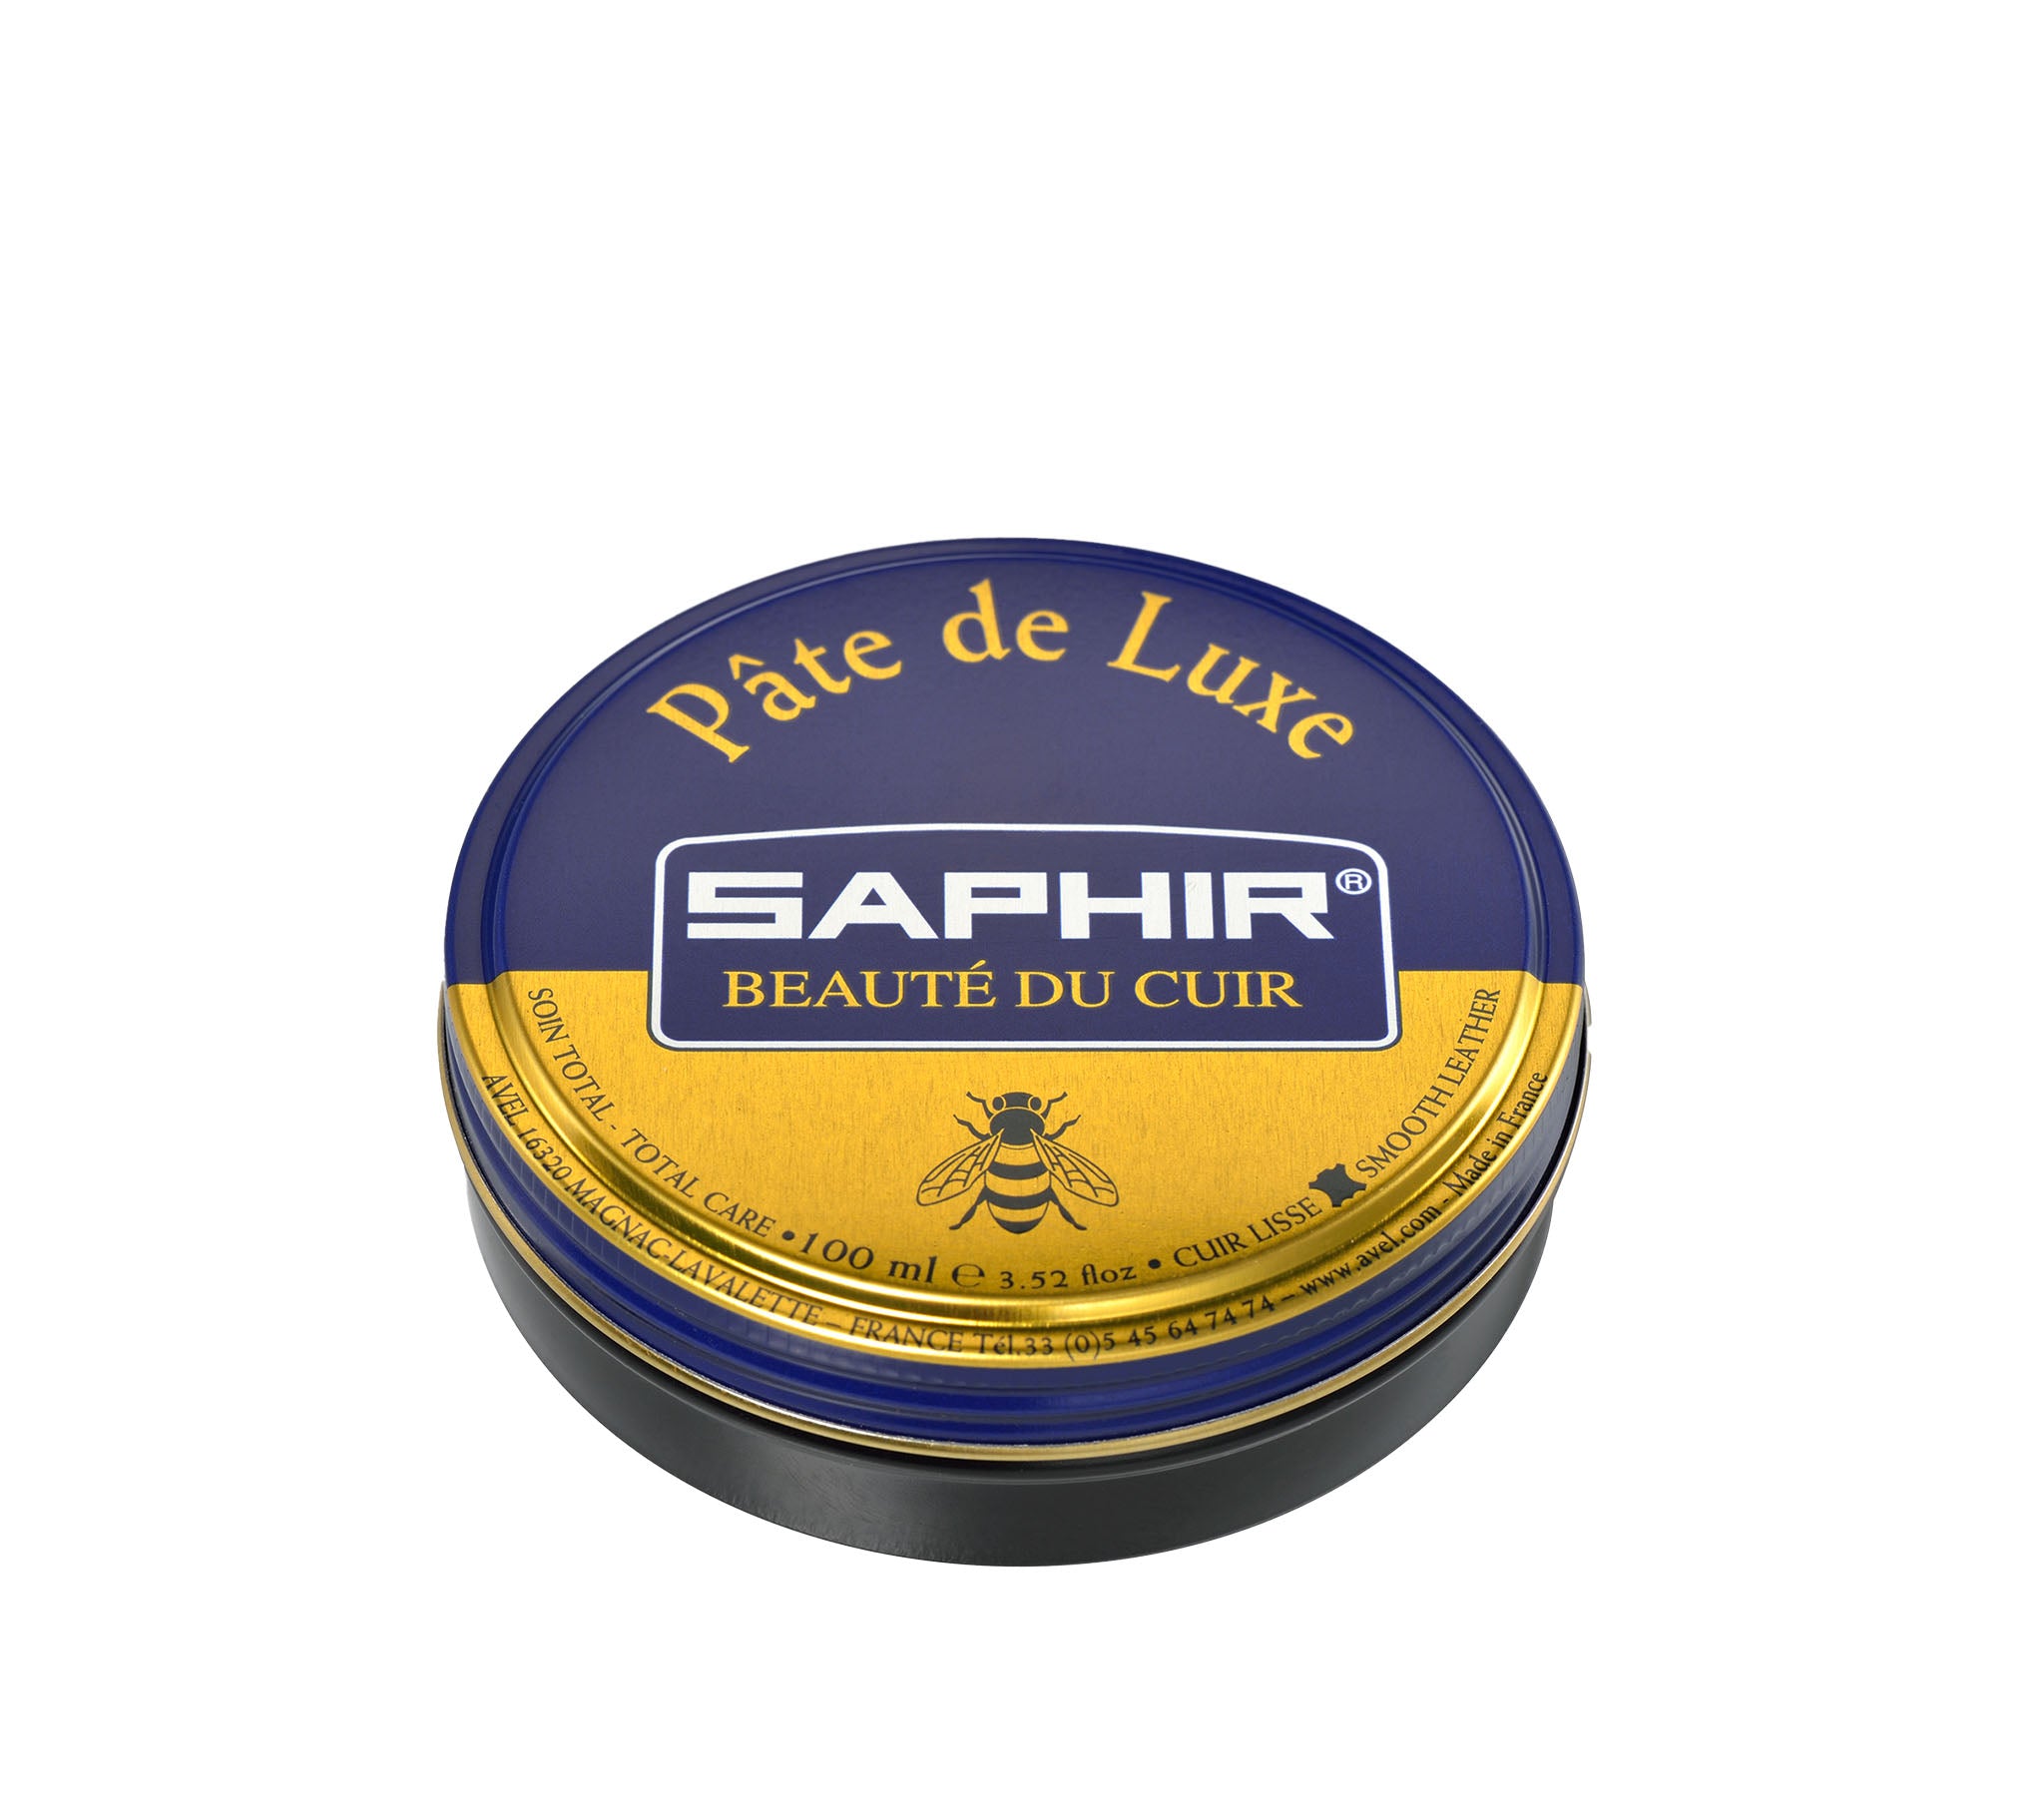 Crème de luxe tube 50ml Noir Saphir